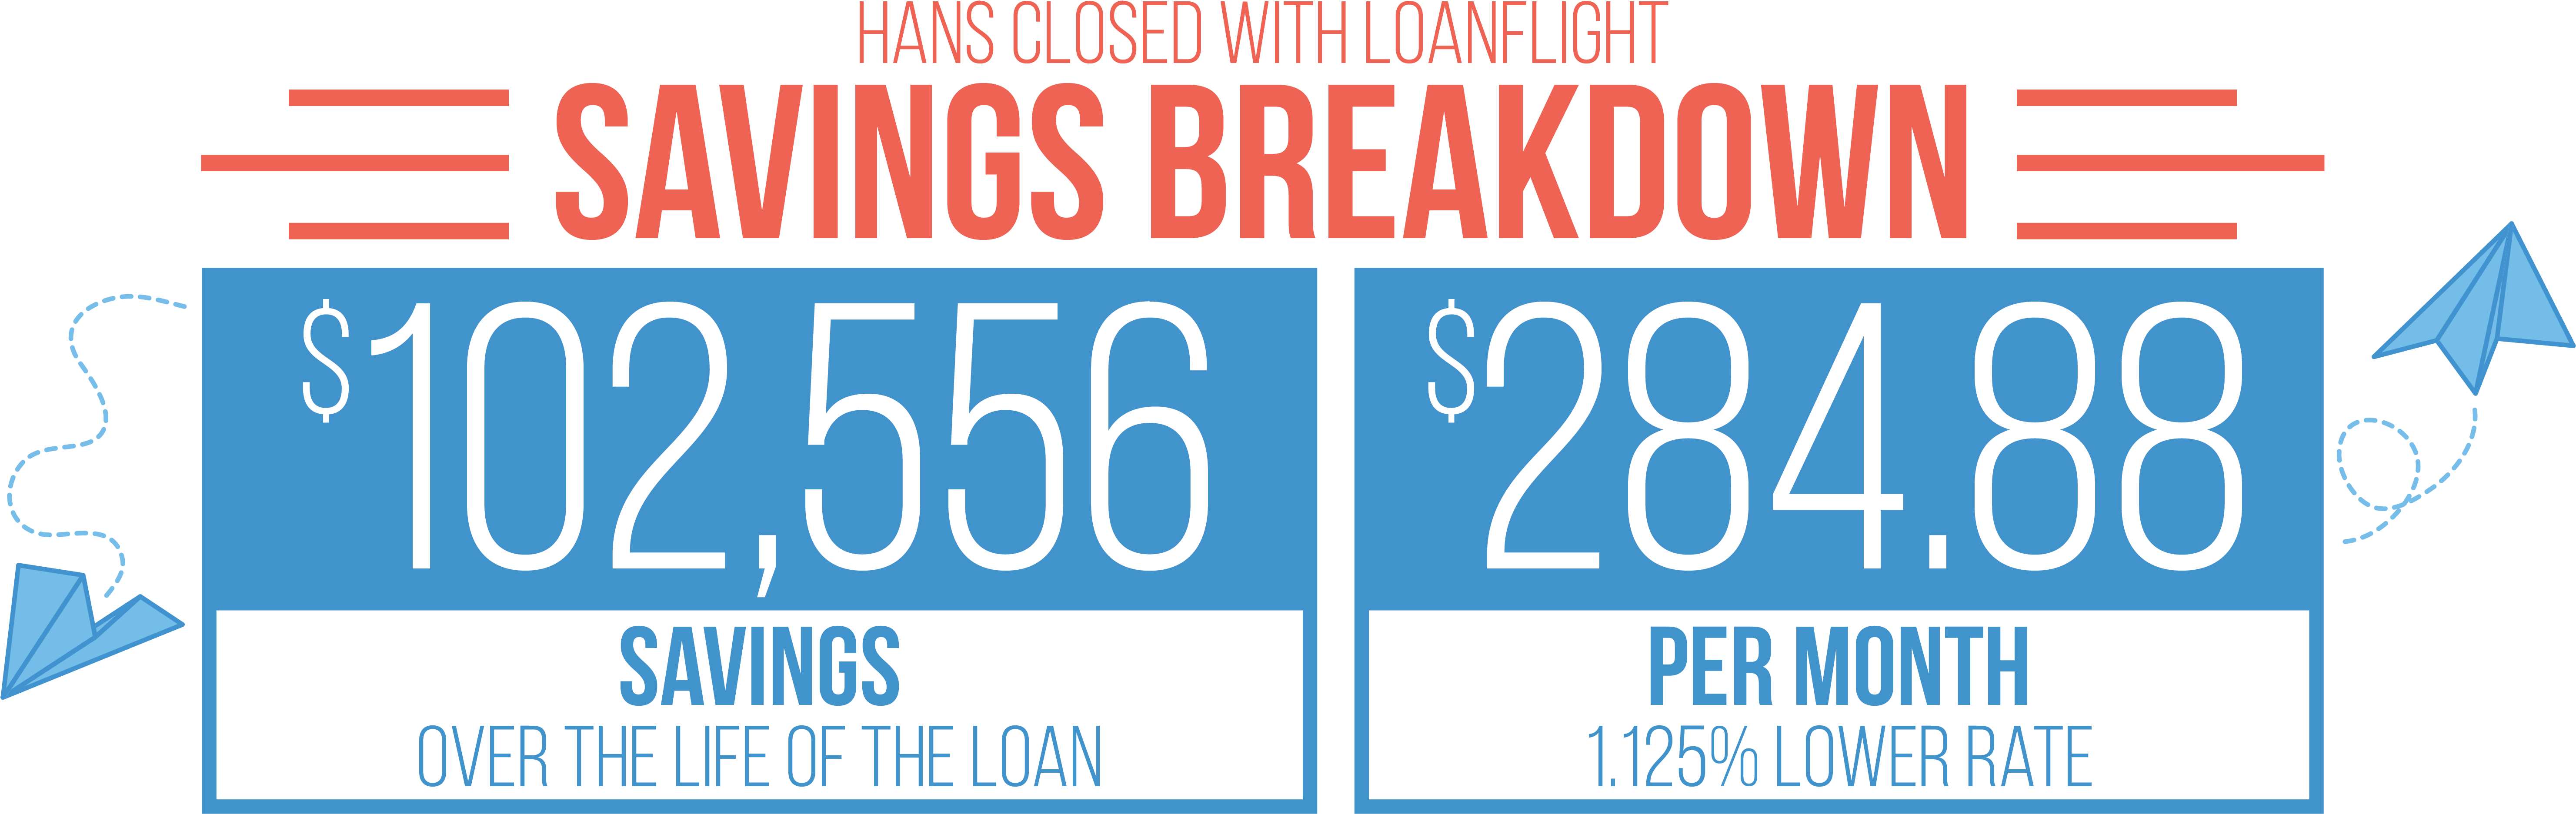 Loan Savings Breakdown Infographic PNG